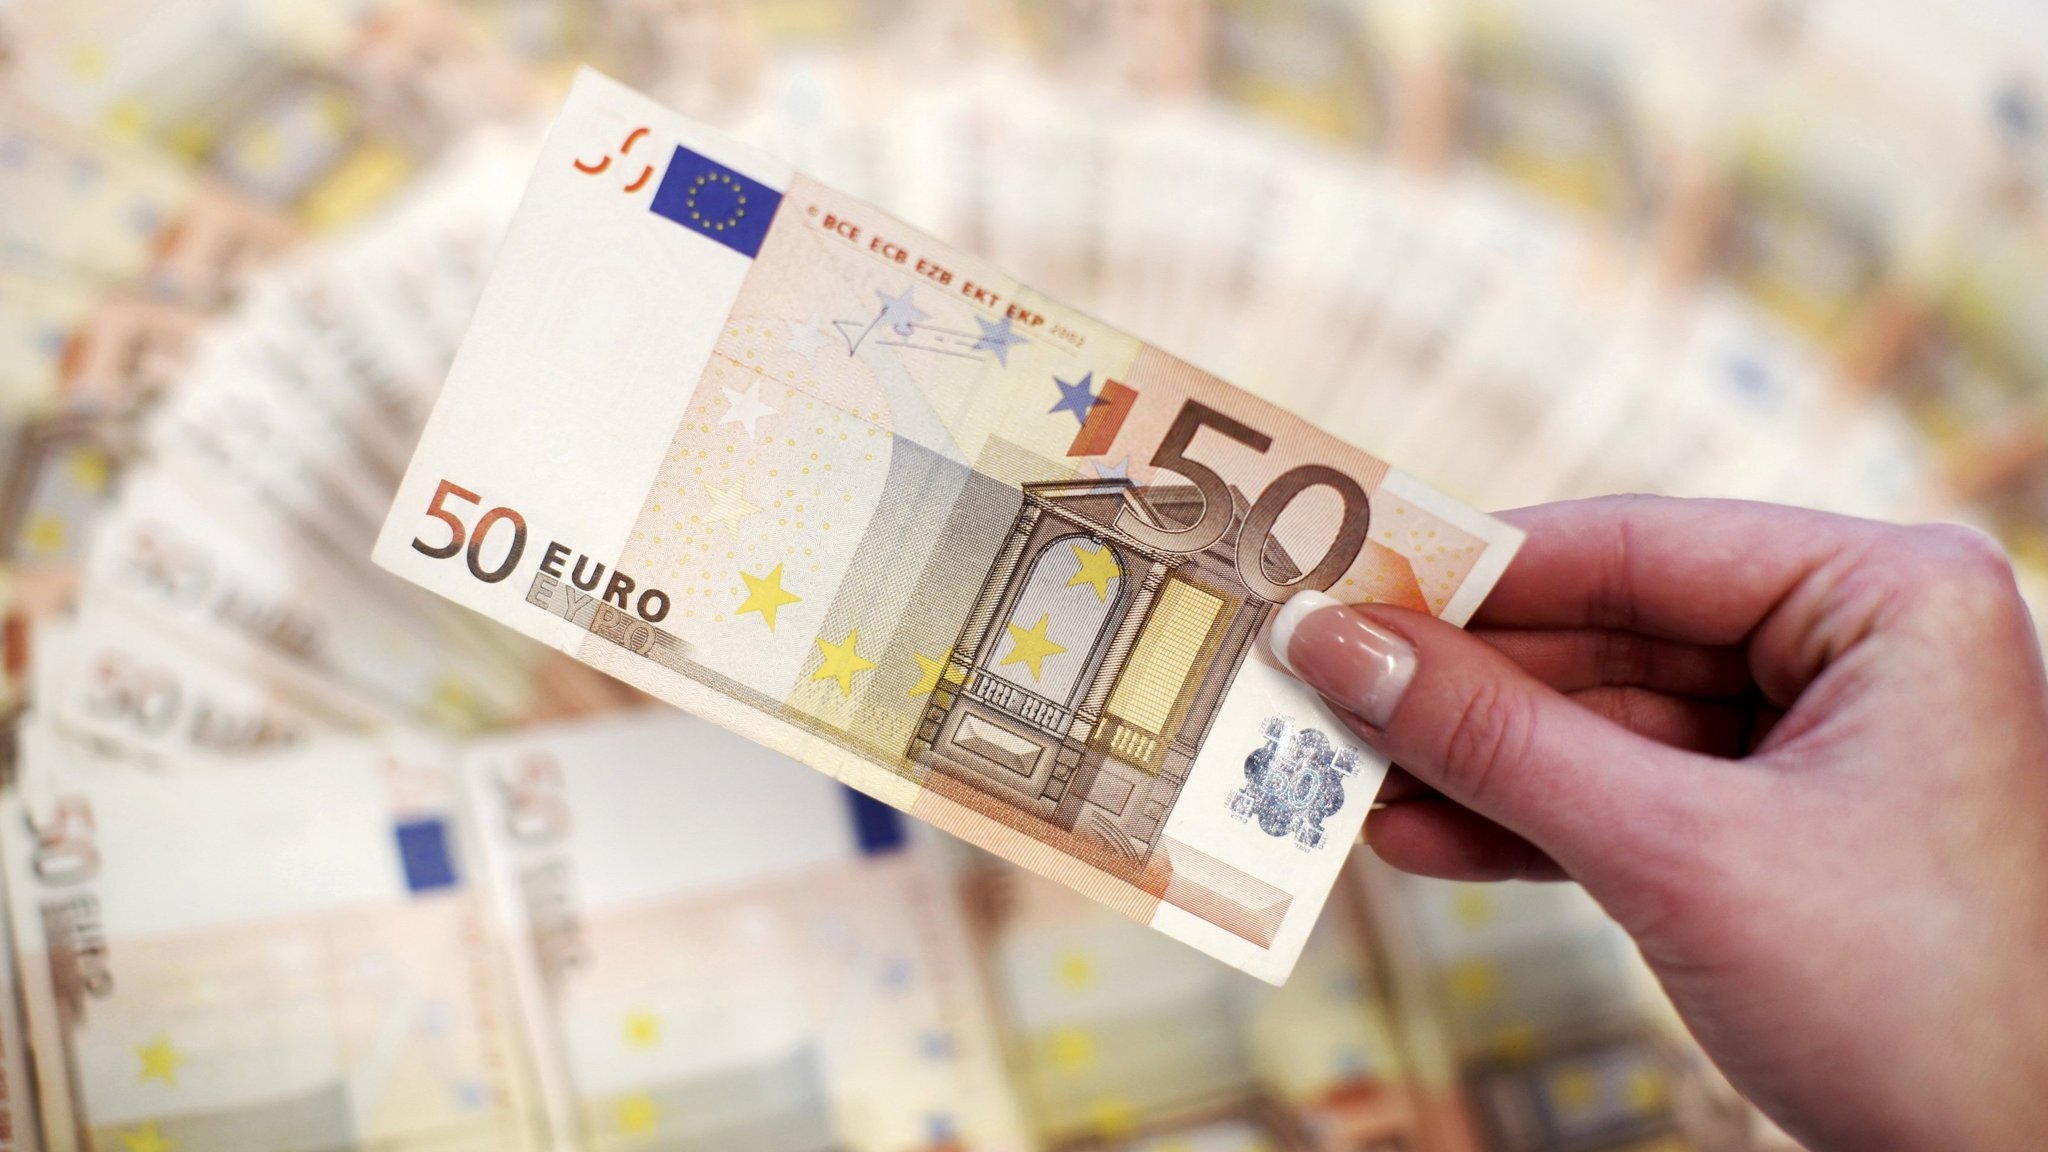 More information about "Άνοιξε η εφαρμογή για τα 600 ευρώ στους επιστήμονες - Αιτήσεις έως 8/5"